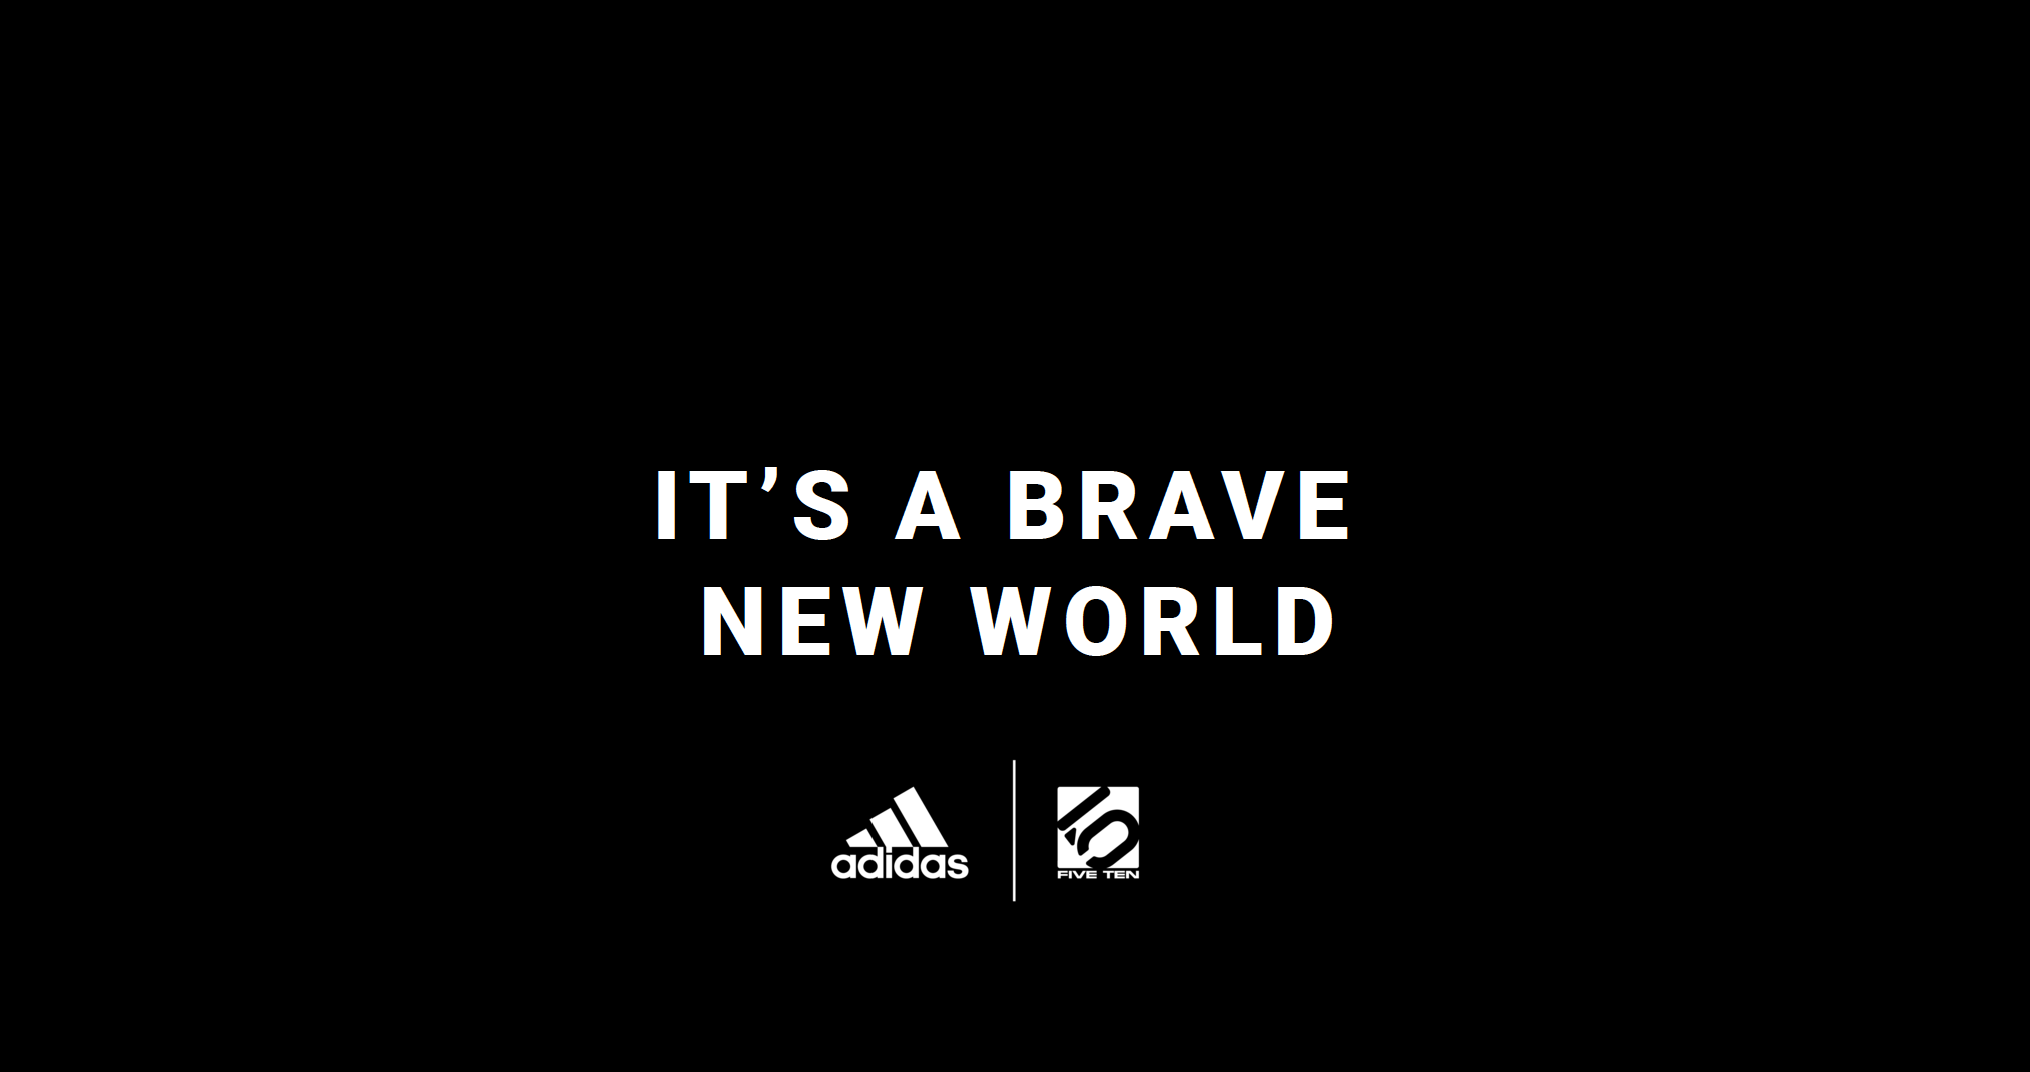 Concepts we like: Five Ten \u0026 Adidas Co-Branding | Braind.co